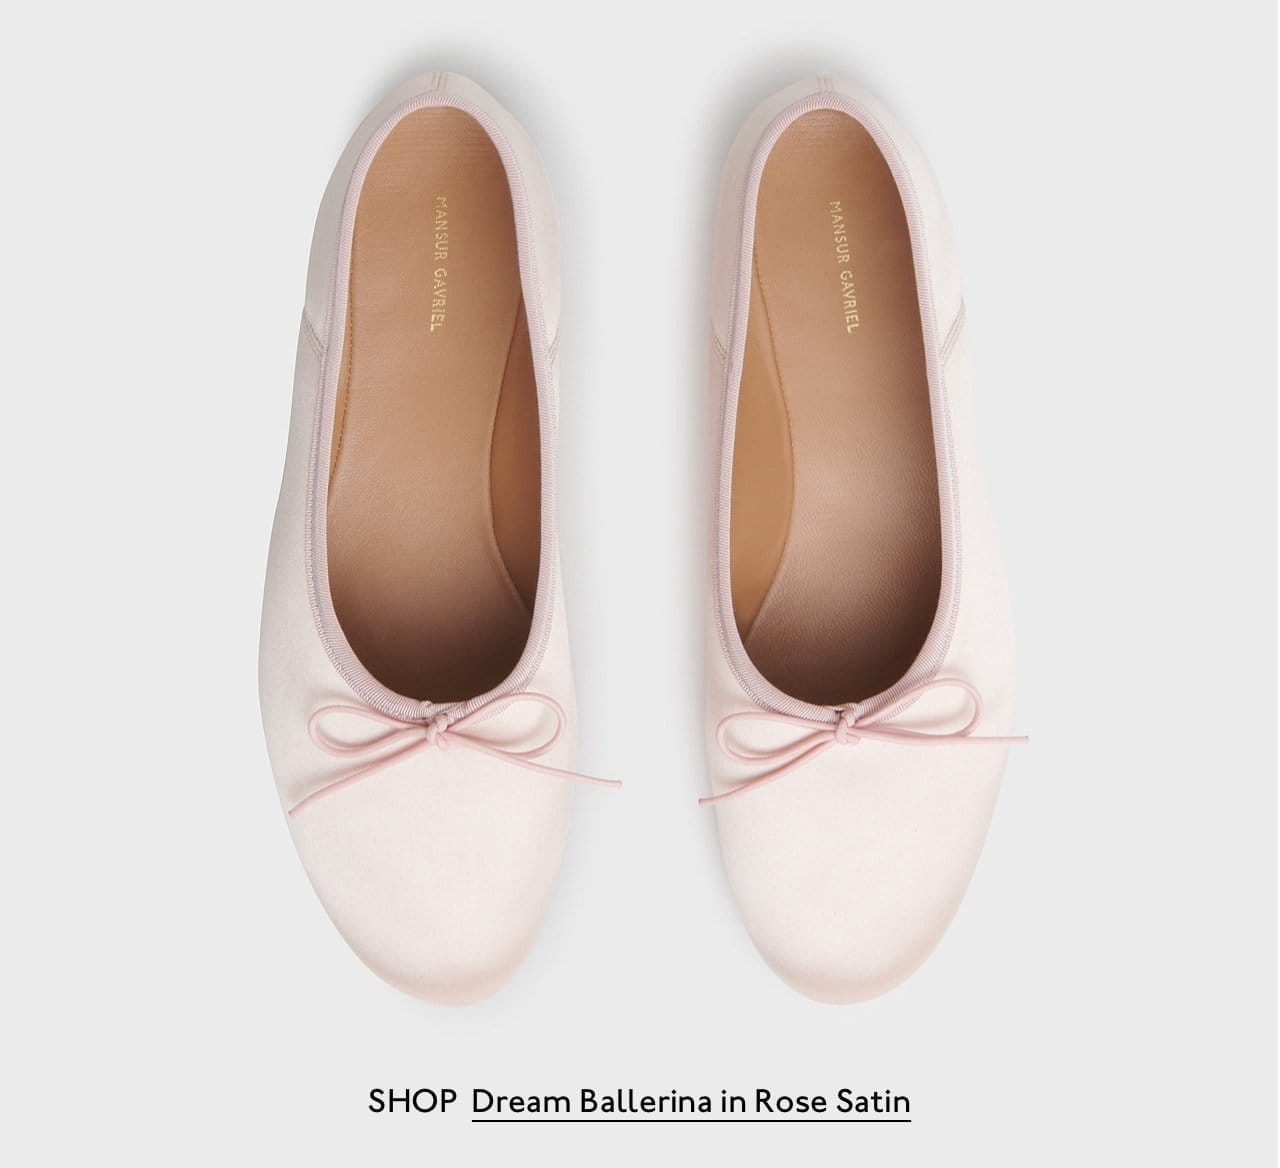 Shop Dream Ballerina in Rose Satin.